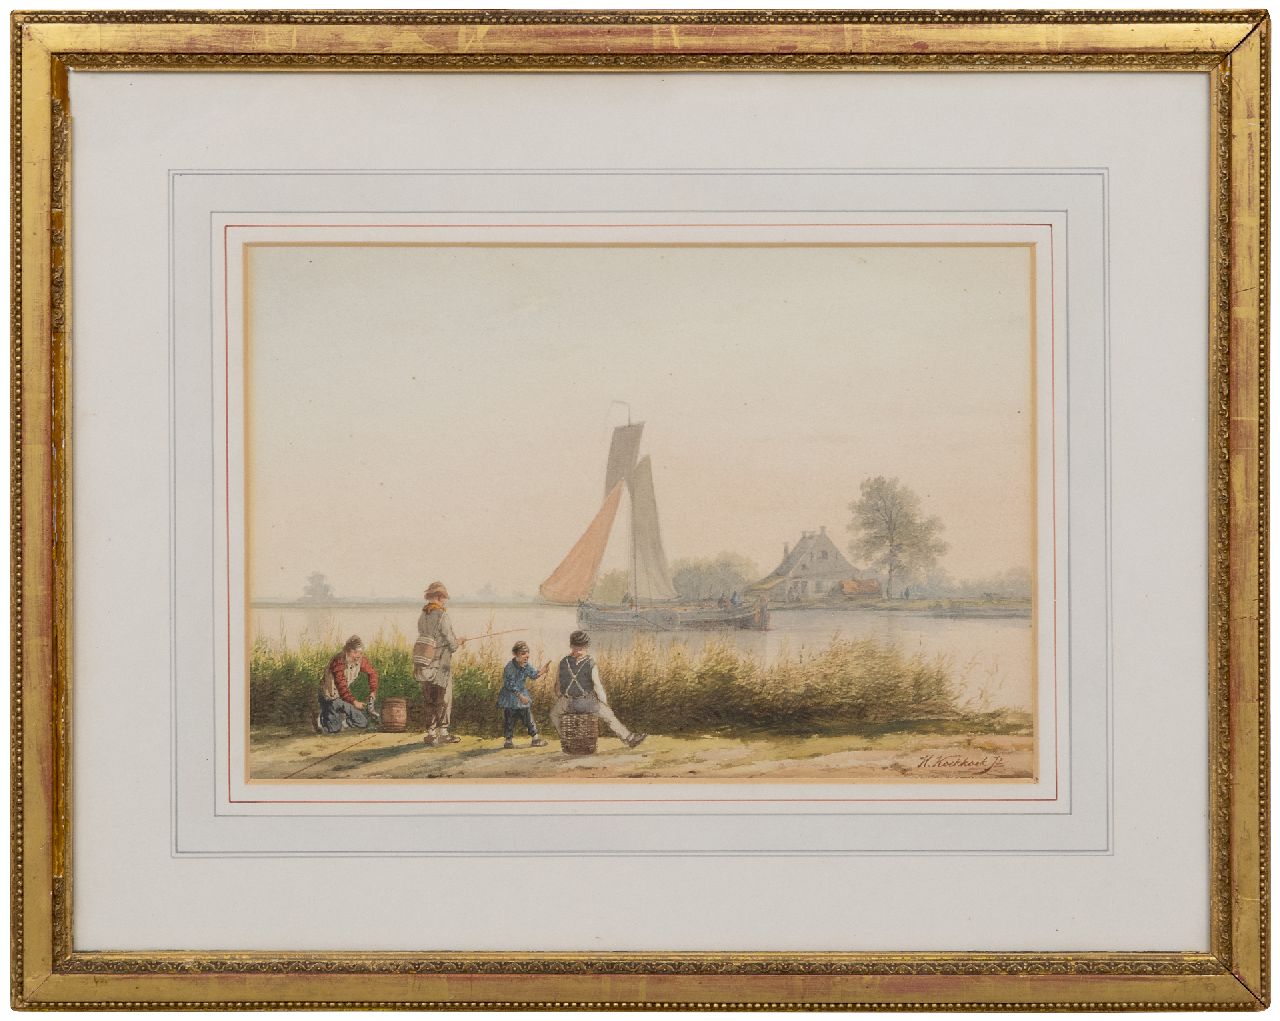 Koekkoek jr. H.  | Hermanus Koekkoek jr. | Watercolours and drawings offered for sale | Children fishing along a riverbank, watercolour on paper 22.0 x 32.0 cm, signed l.r.